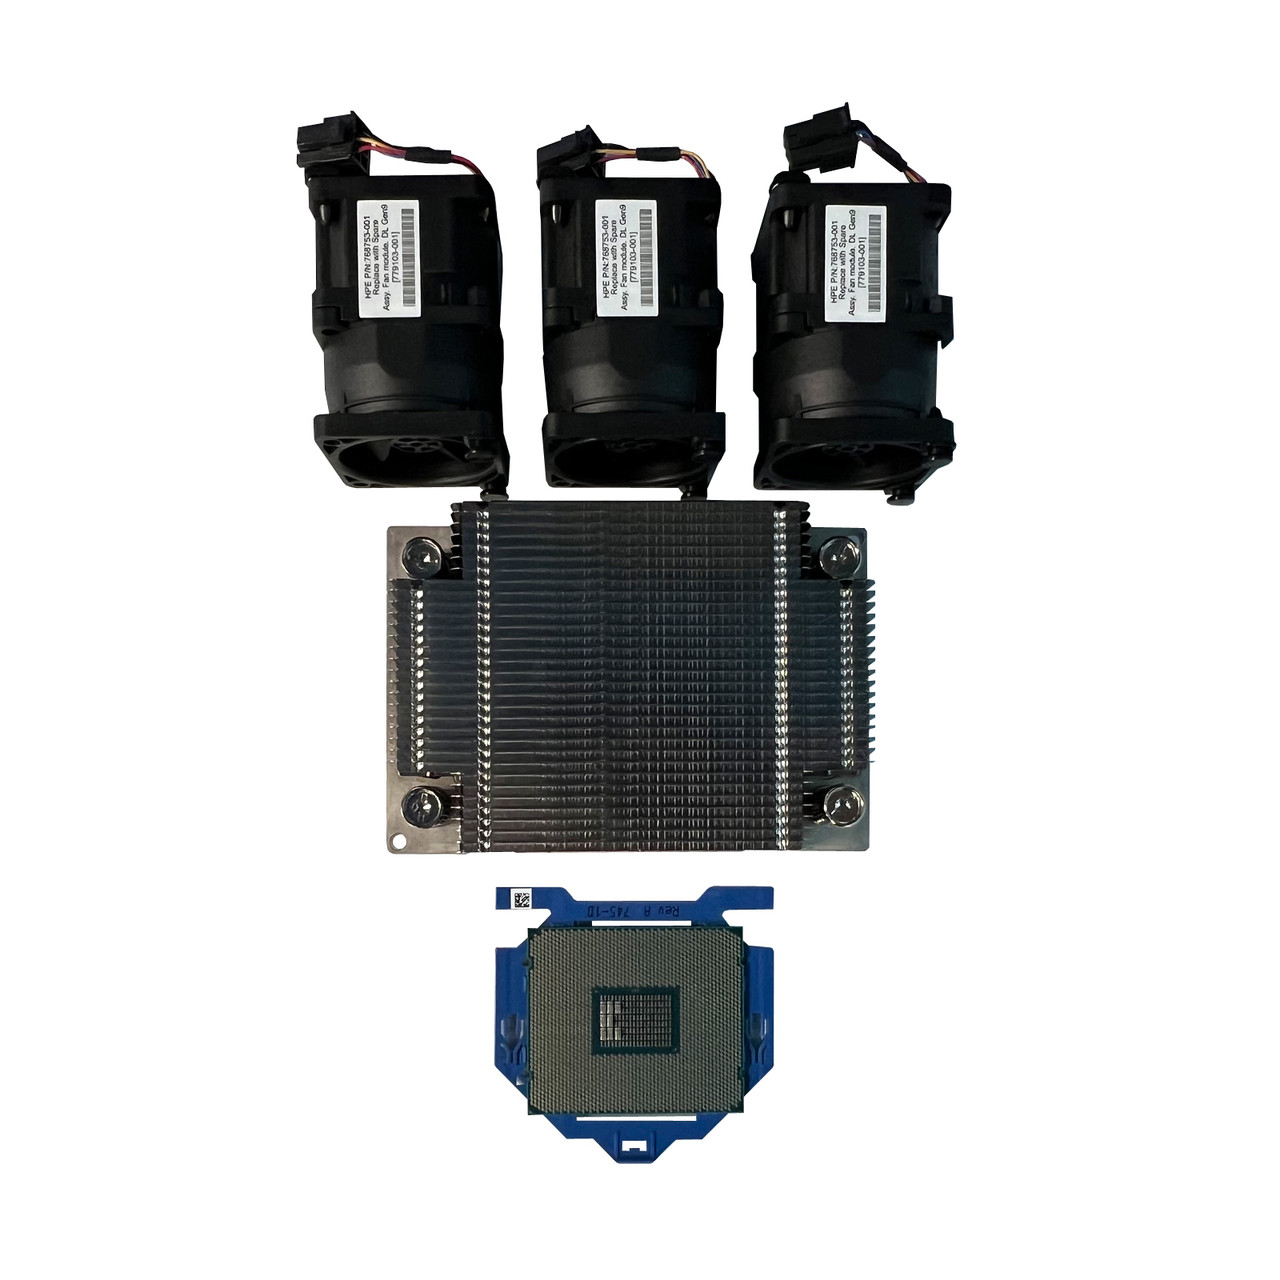 HPE 801288-B21 DL160 Gen9 Xeon E5-2609 V4 8C 1.7Ghz Processor Kit